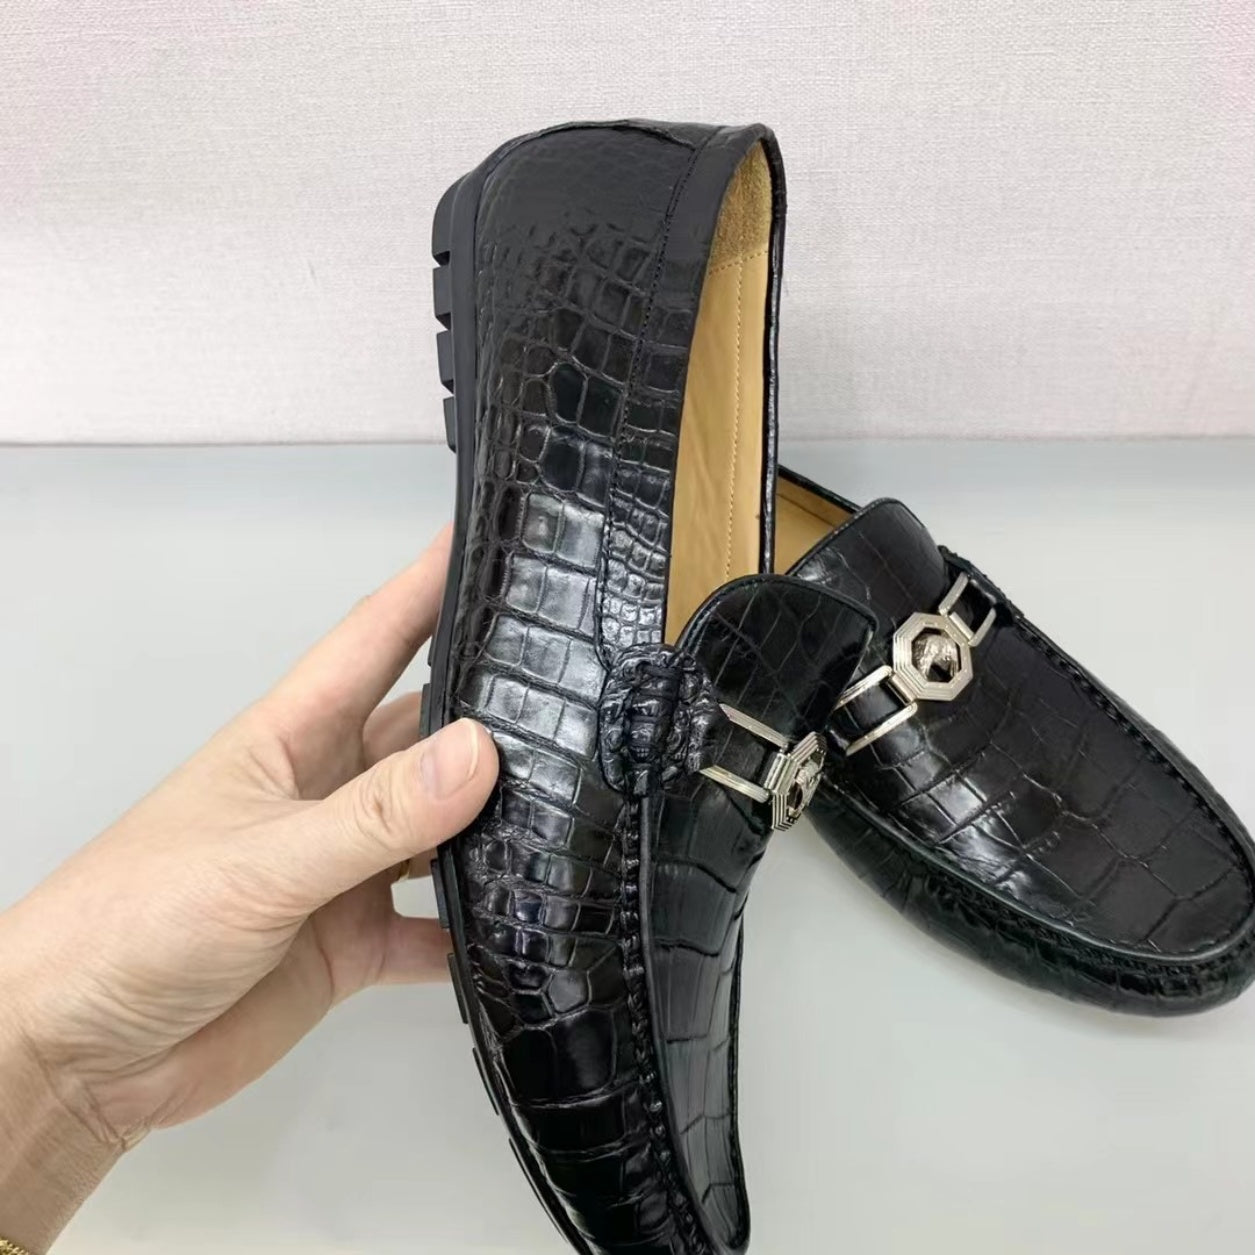 Men's Shoes Genuine Crocodile Alligator Skin Leather Handmade Black, Brown Size 7 - Size 11US #8692